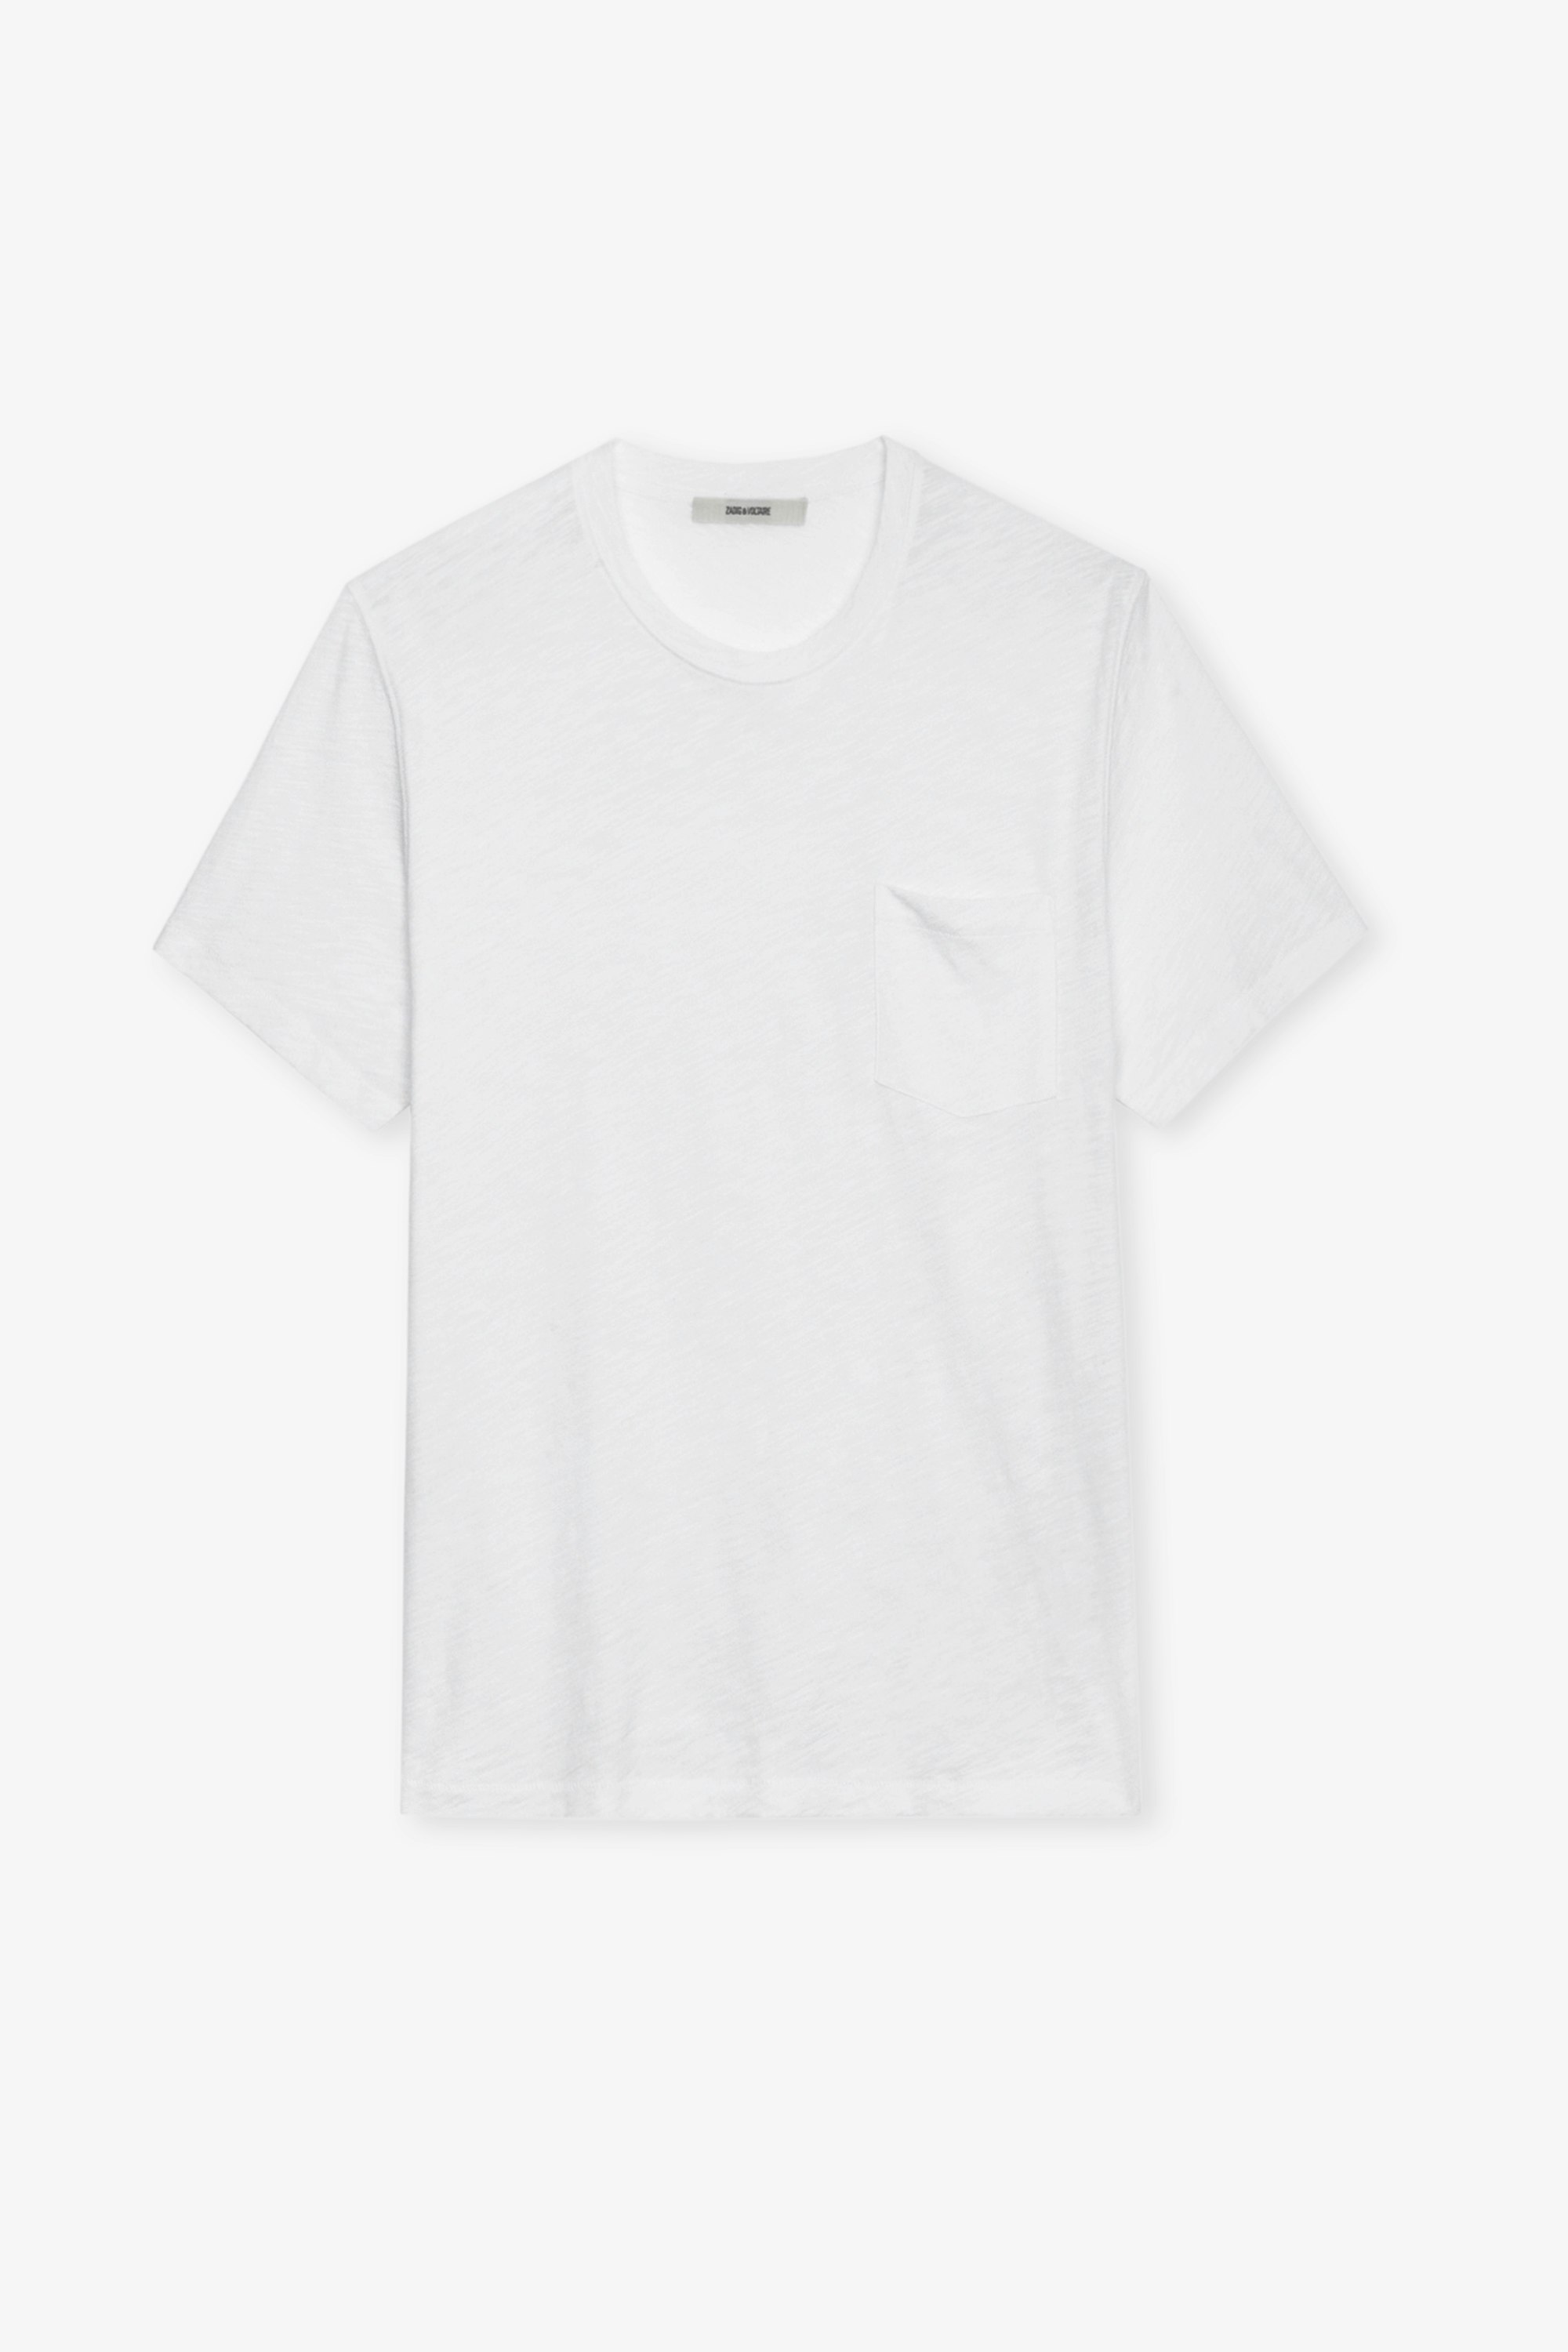 Stockholm Slub T-shirt - Men’s white slub cotton T-shirt with a chest pocket and Skull motif on the back.